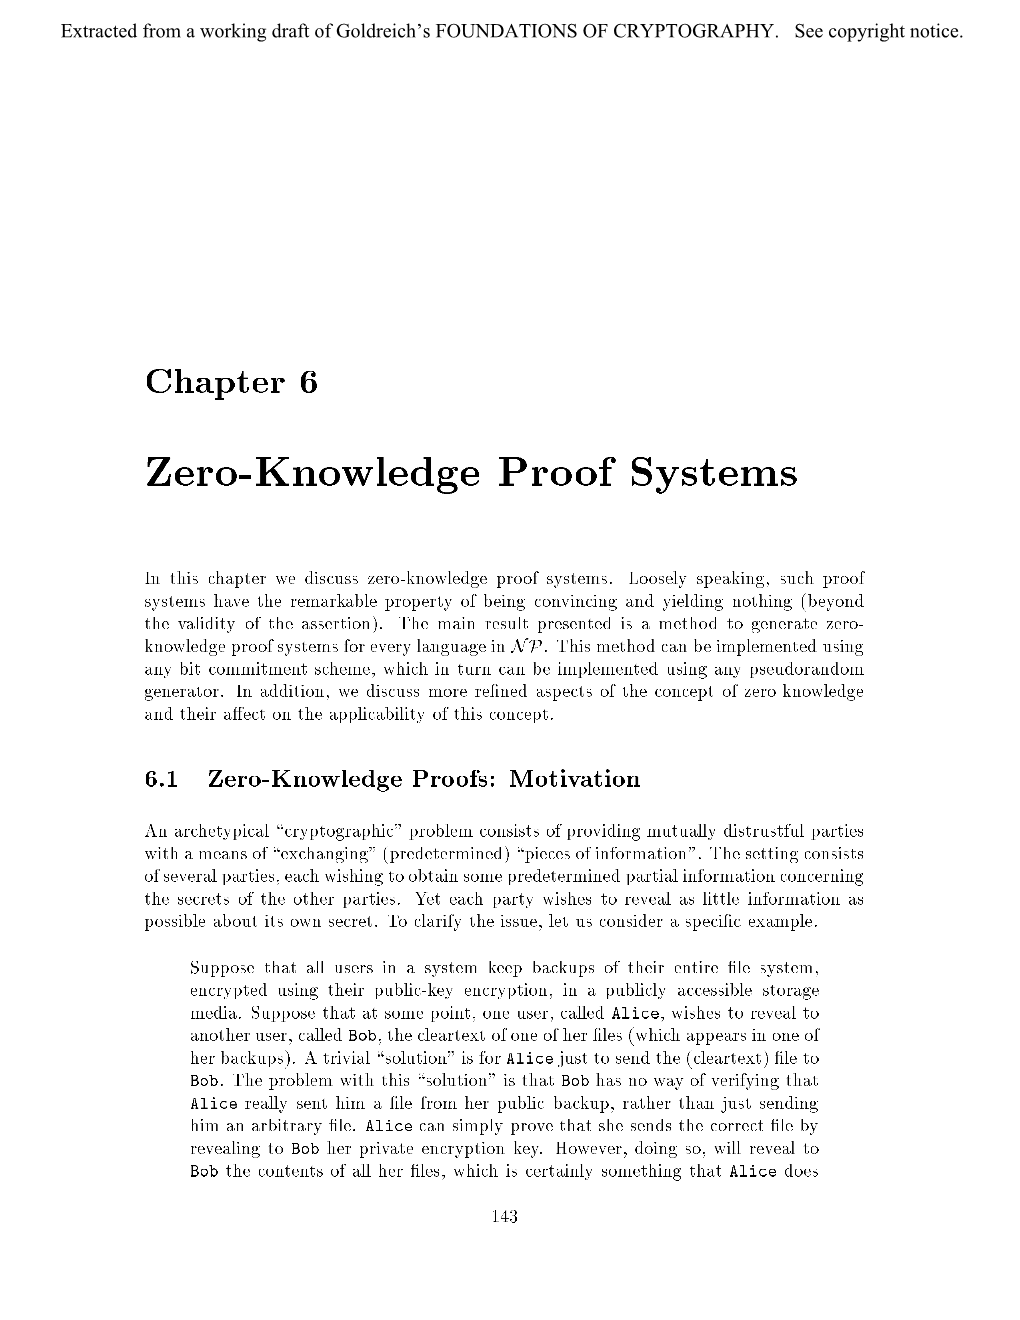 Zero-Knowledge Proof Systems